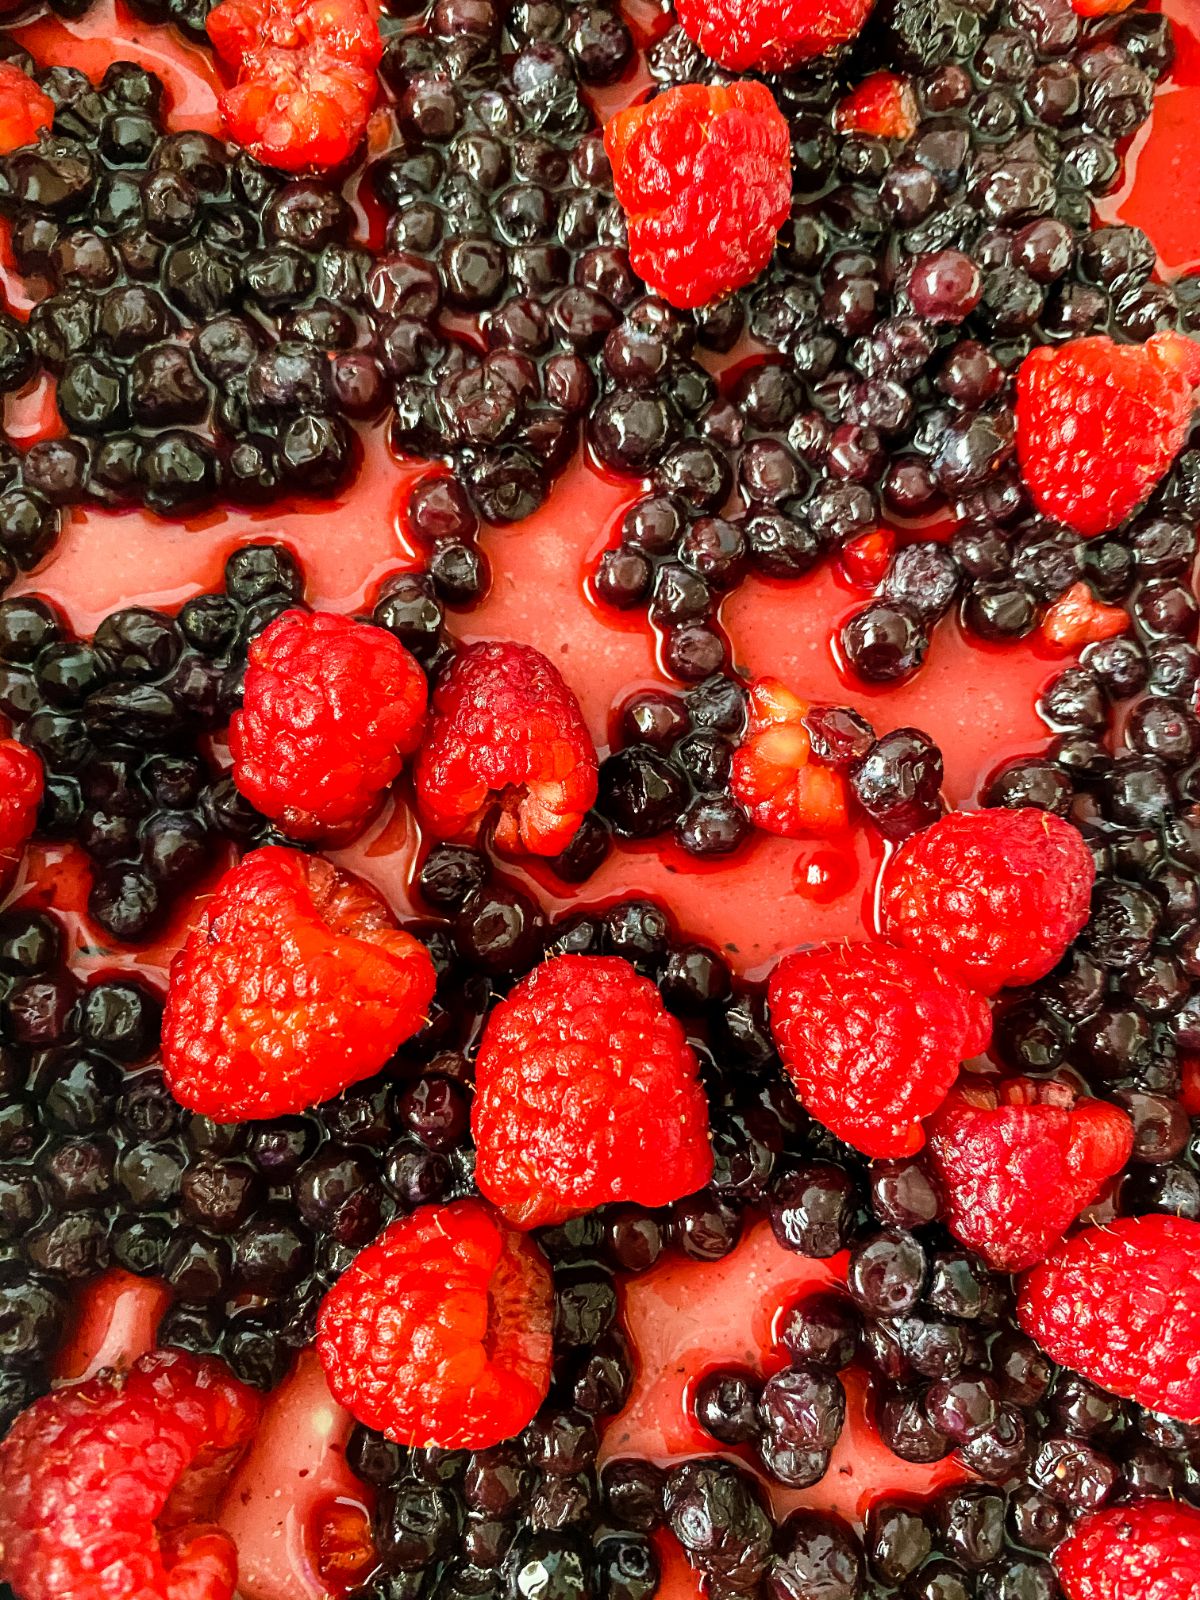 blueberries and raspberries in bowl